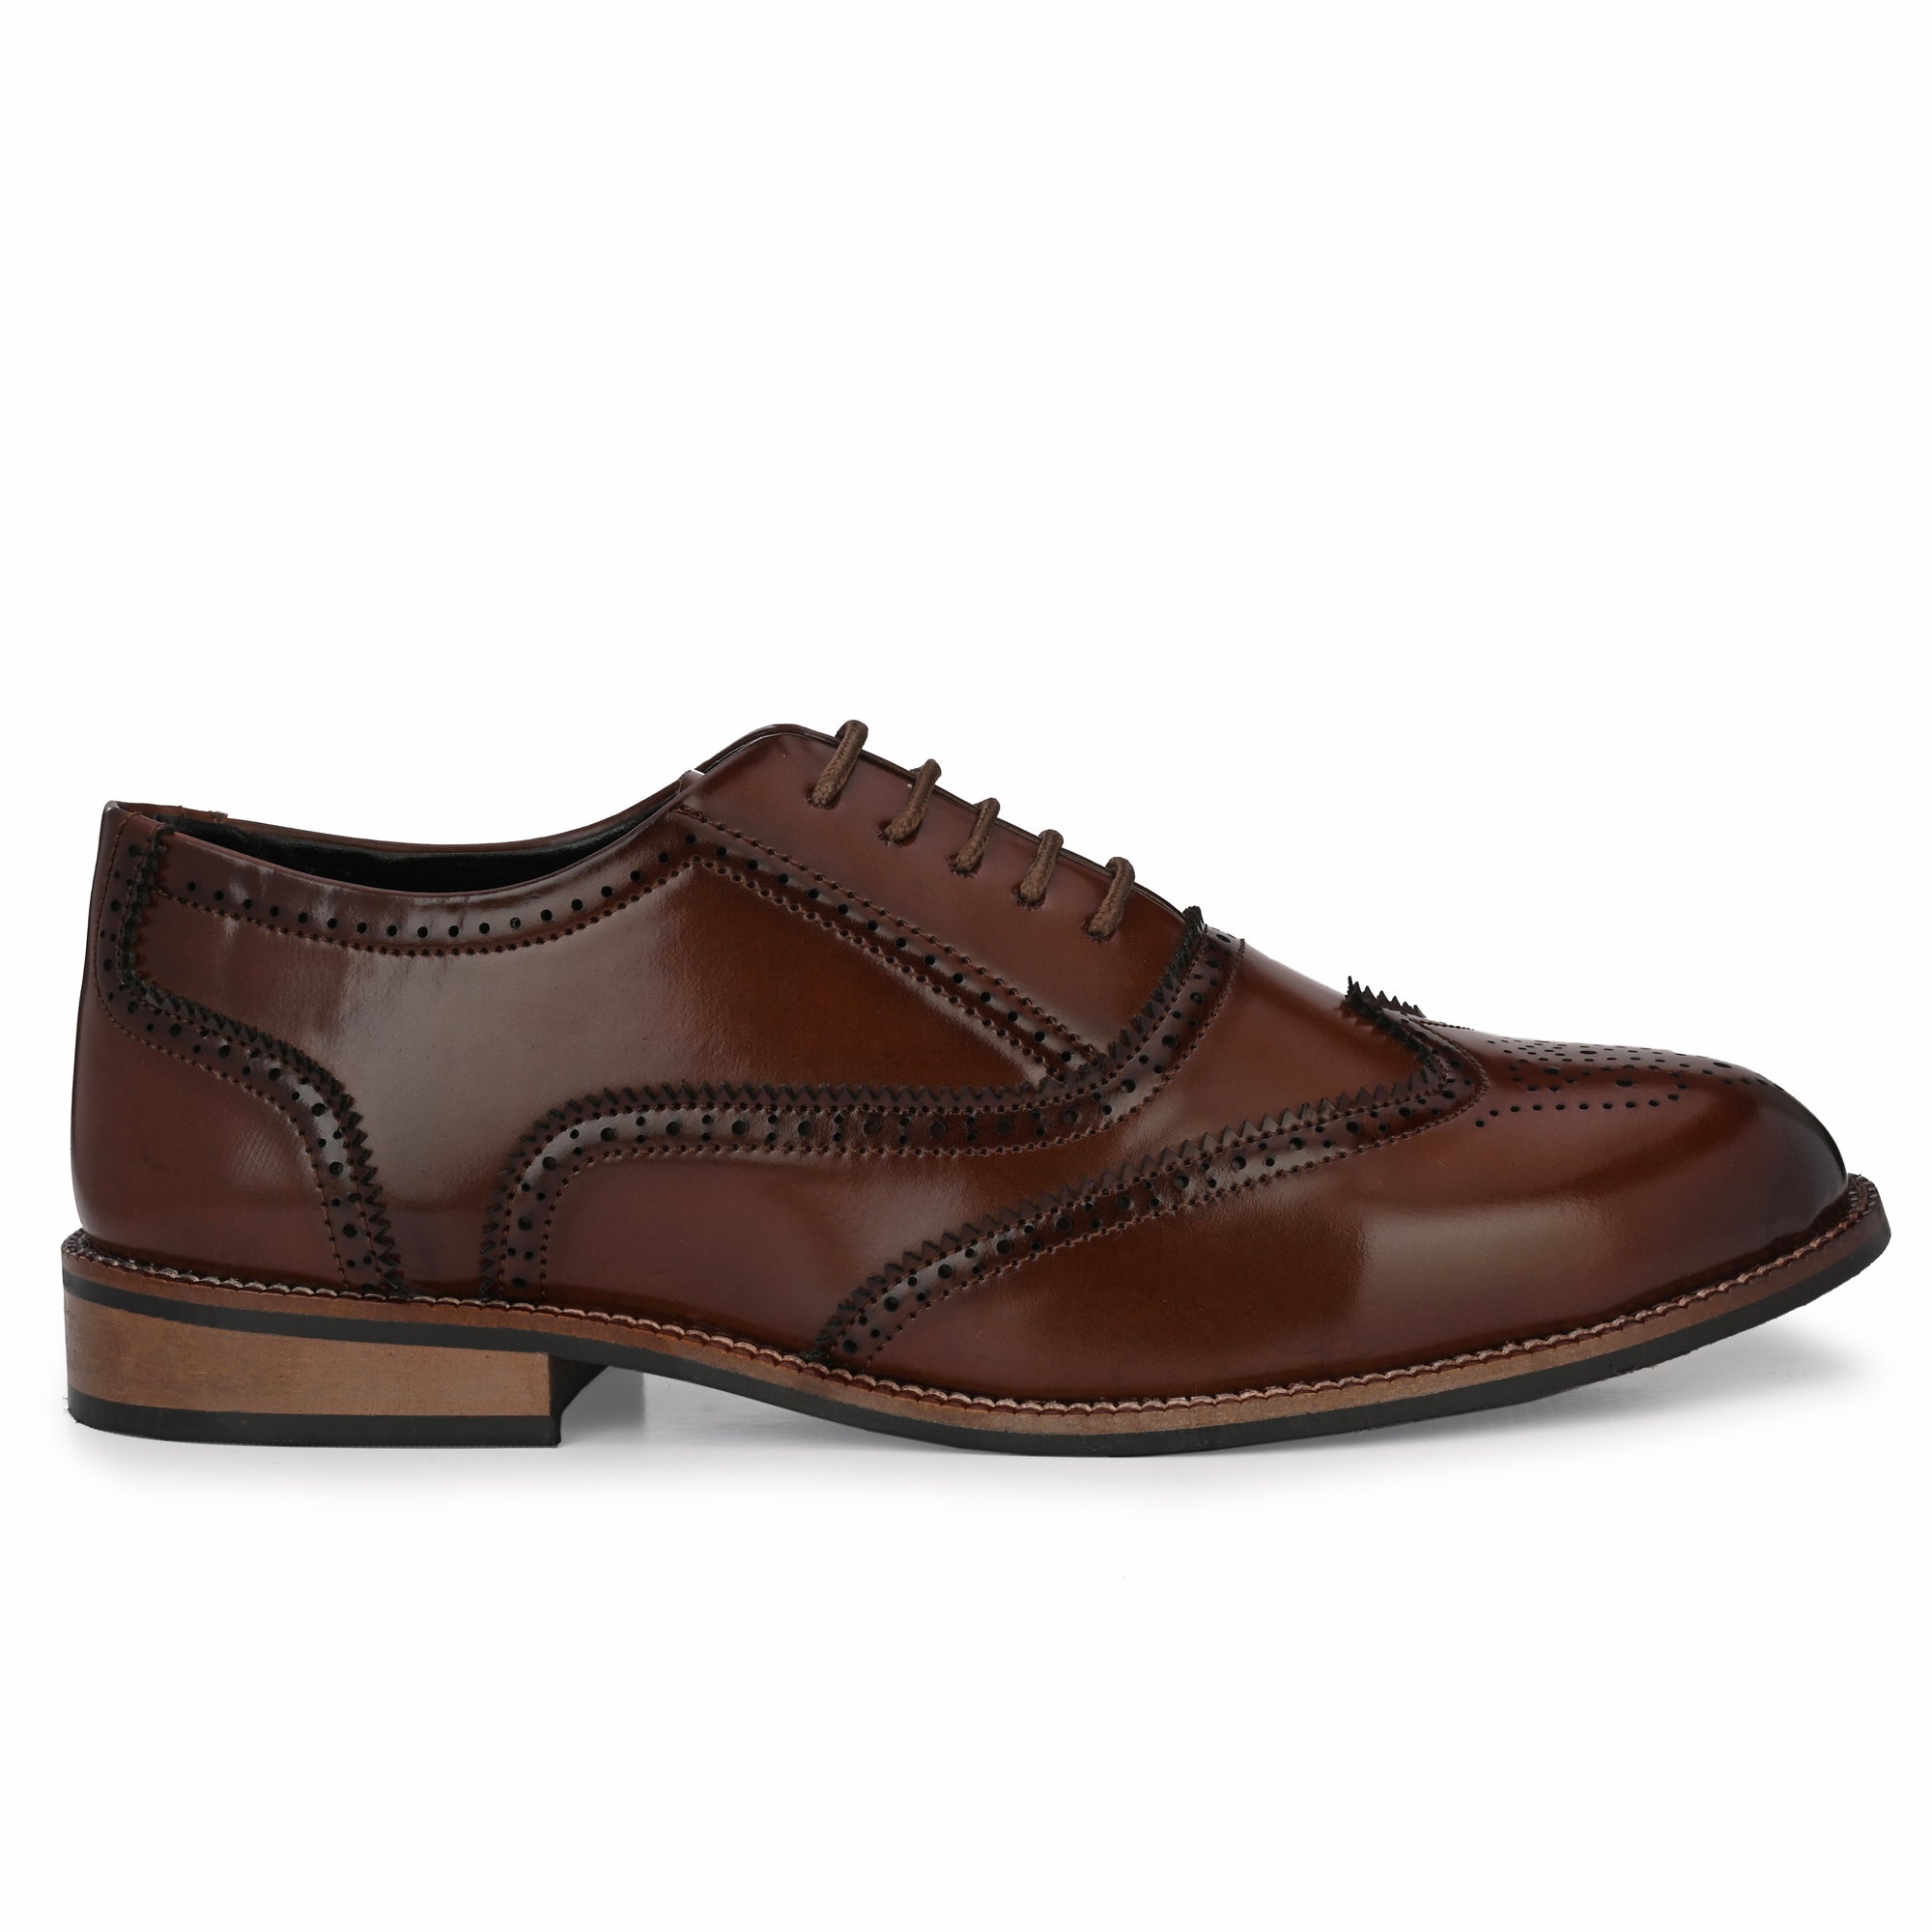 attitudist-brown-wing-tip-formal-lace-up-brouge-shoes-for-men